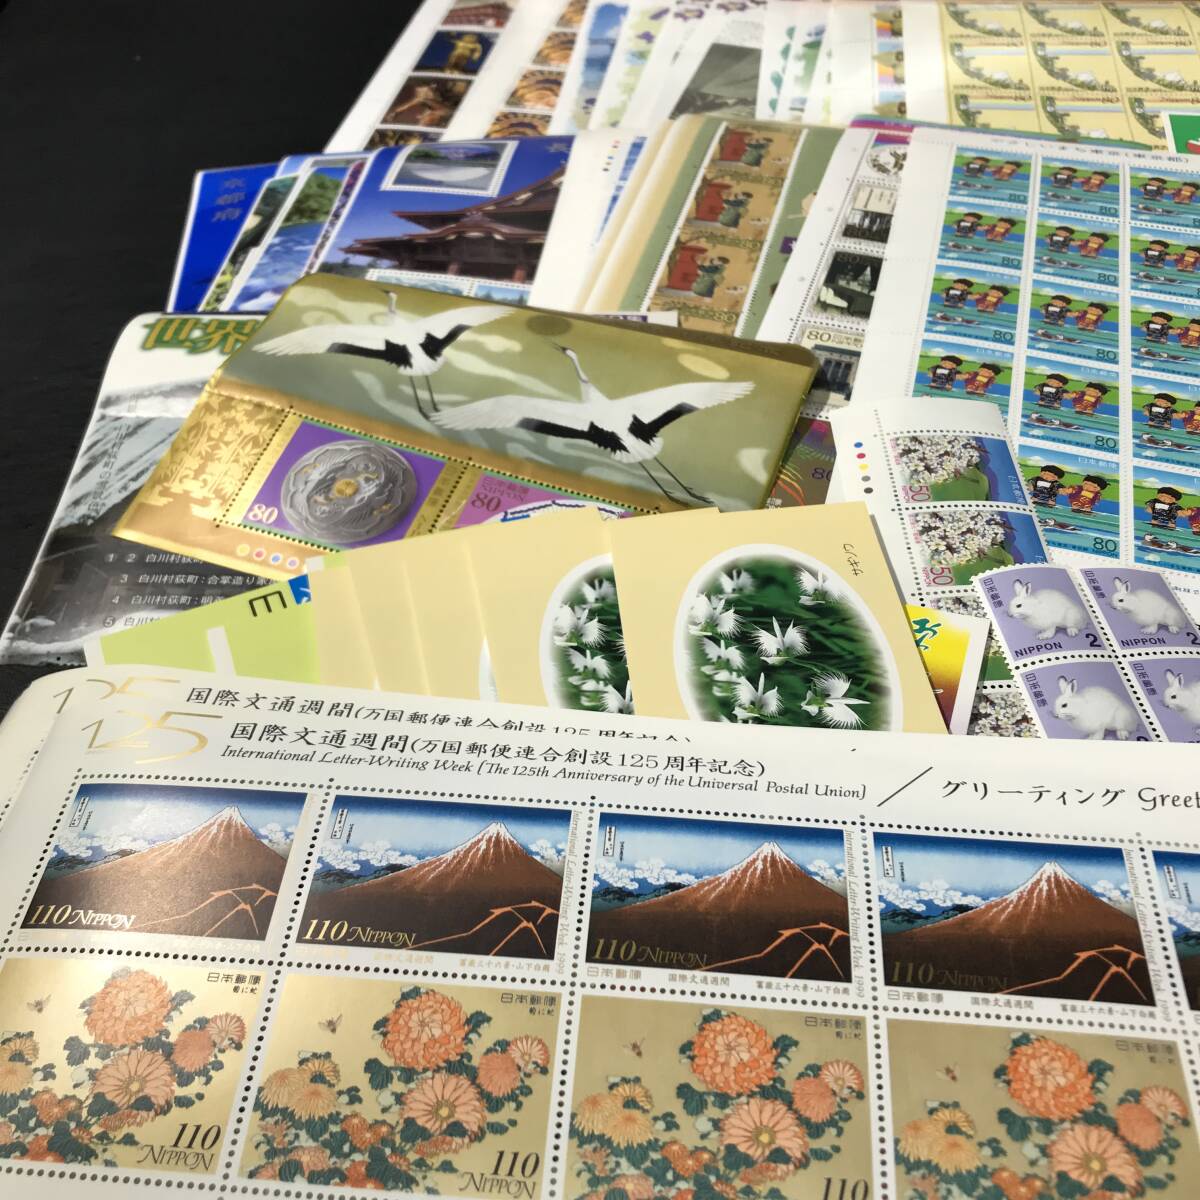 TG10 日本切手 未使用のみ 額面80118円分 シート 記念切手 まとめての画像6